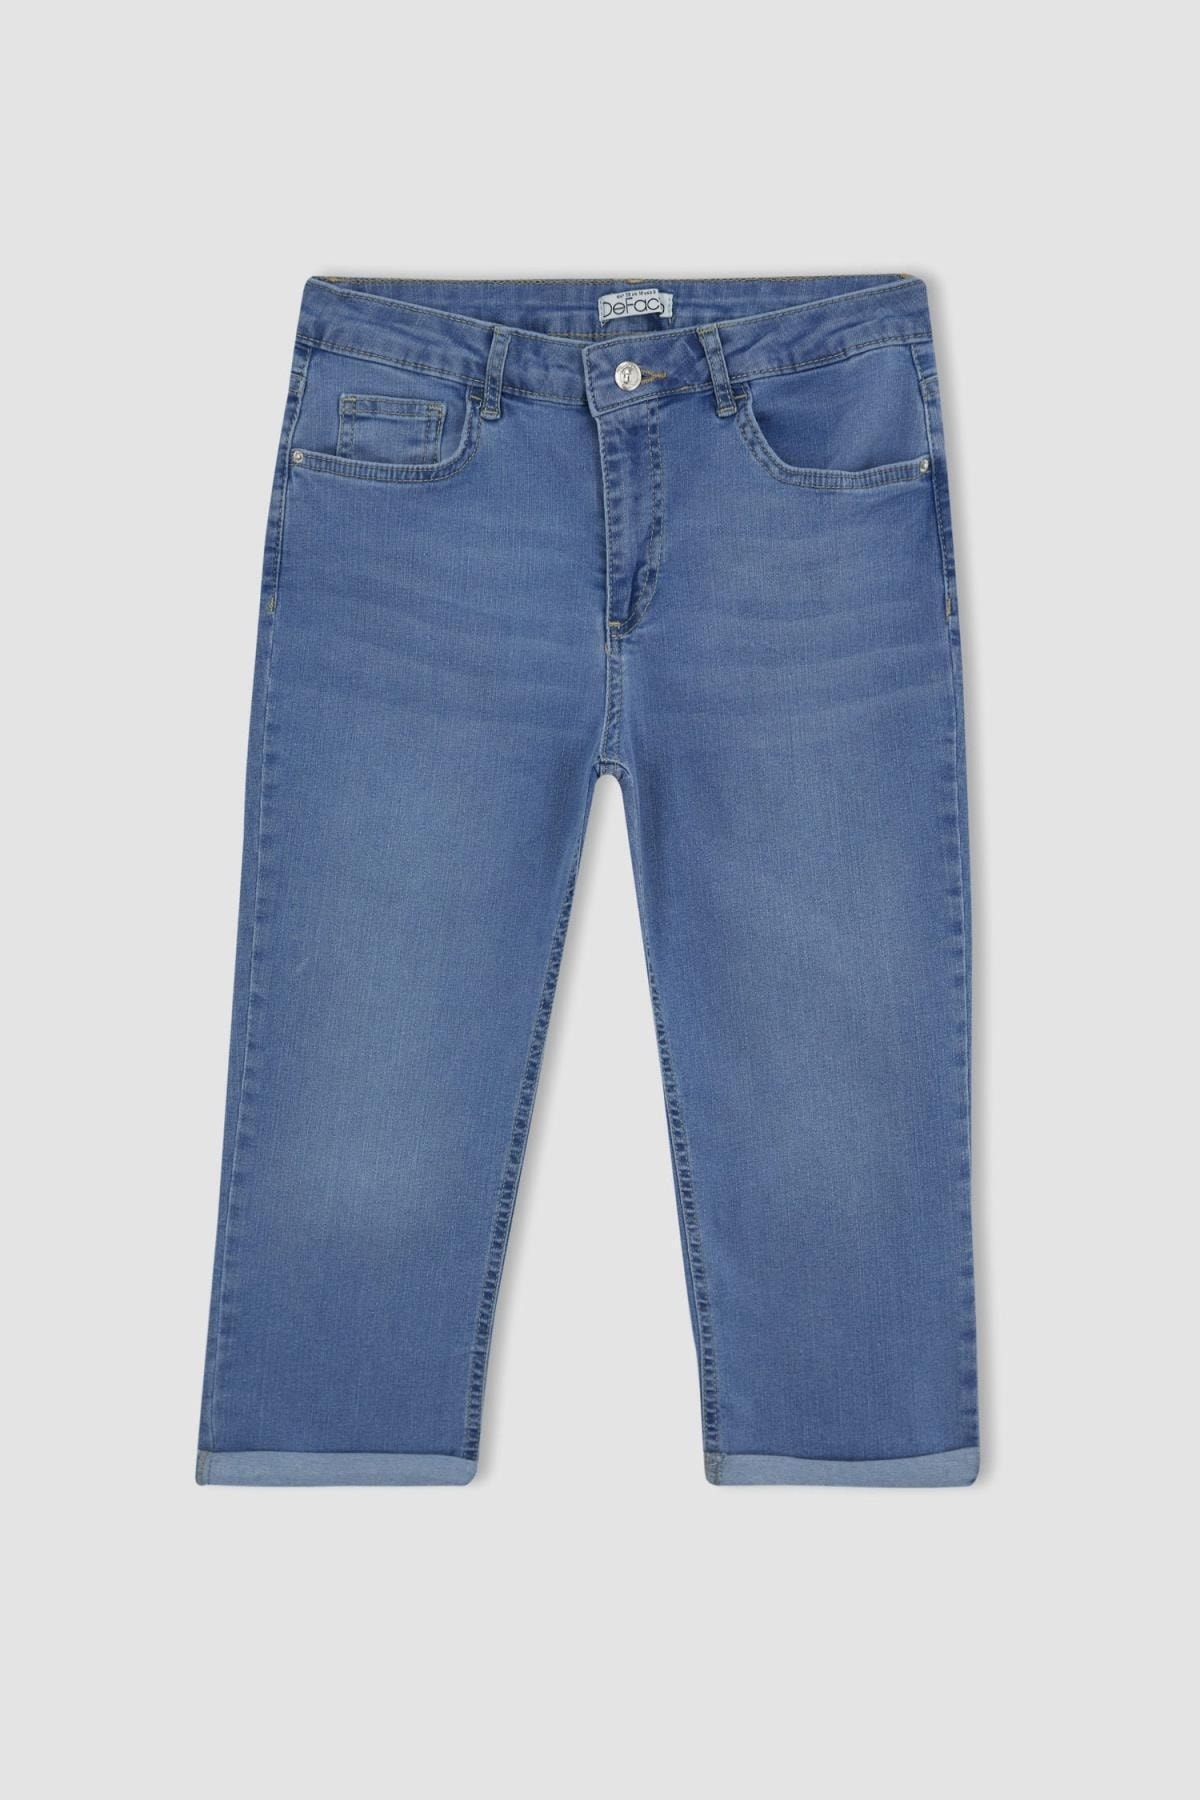 DeFacto Jeans Blau Straight